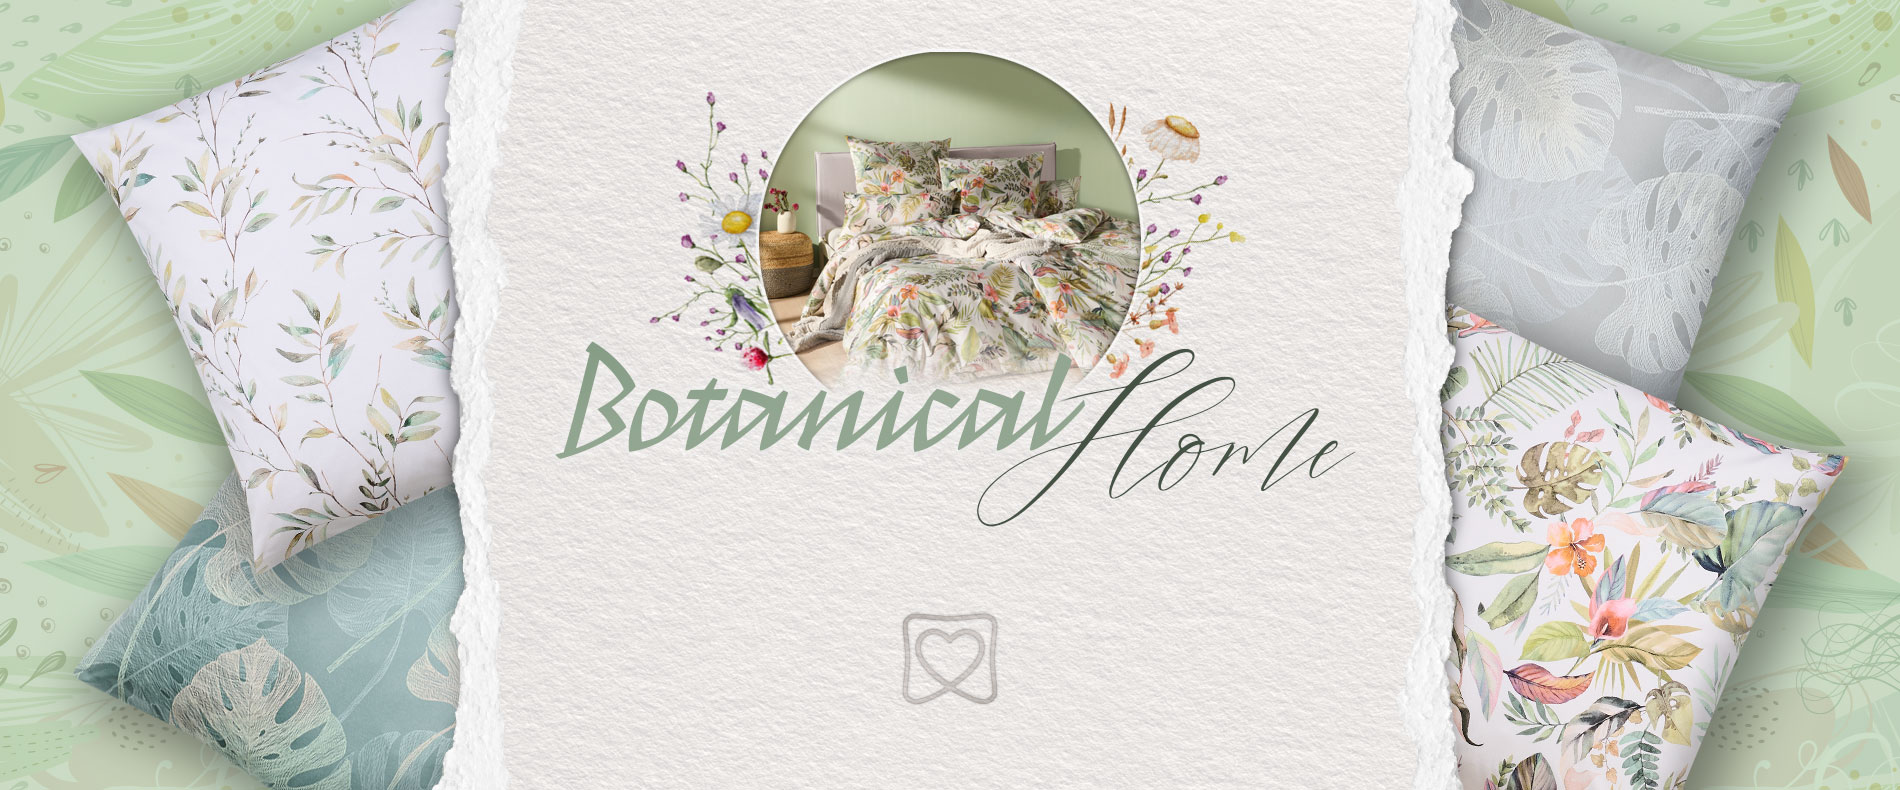 Estella Botanical Home Thema | Online-Shop